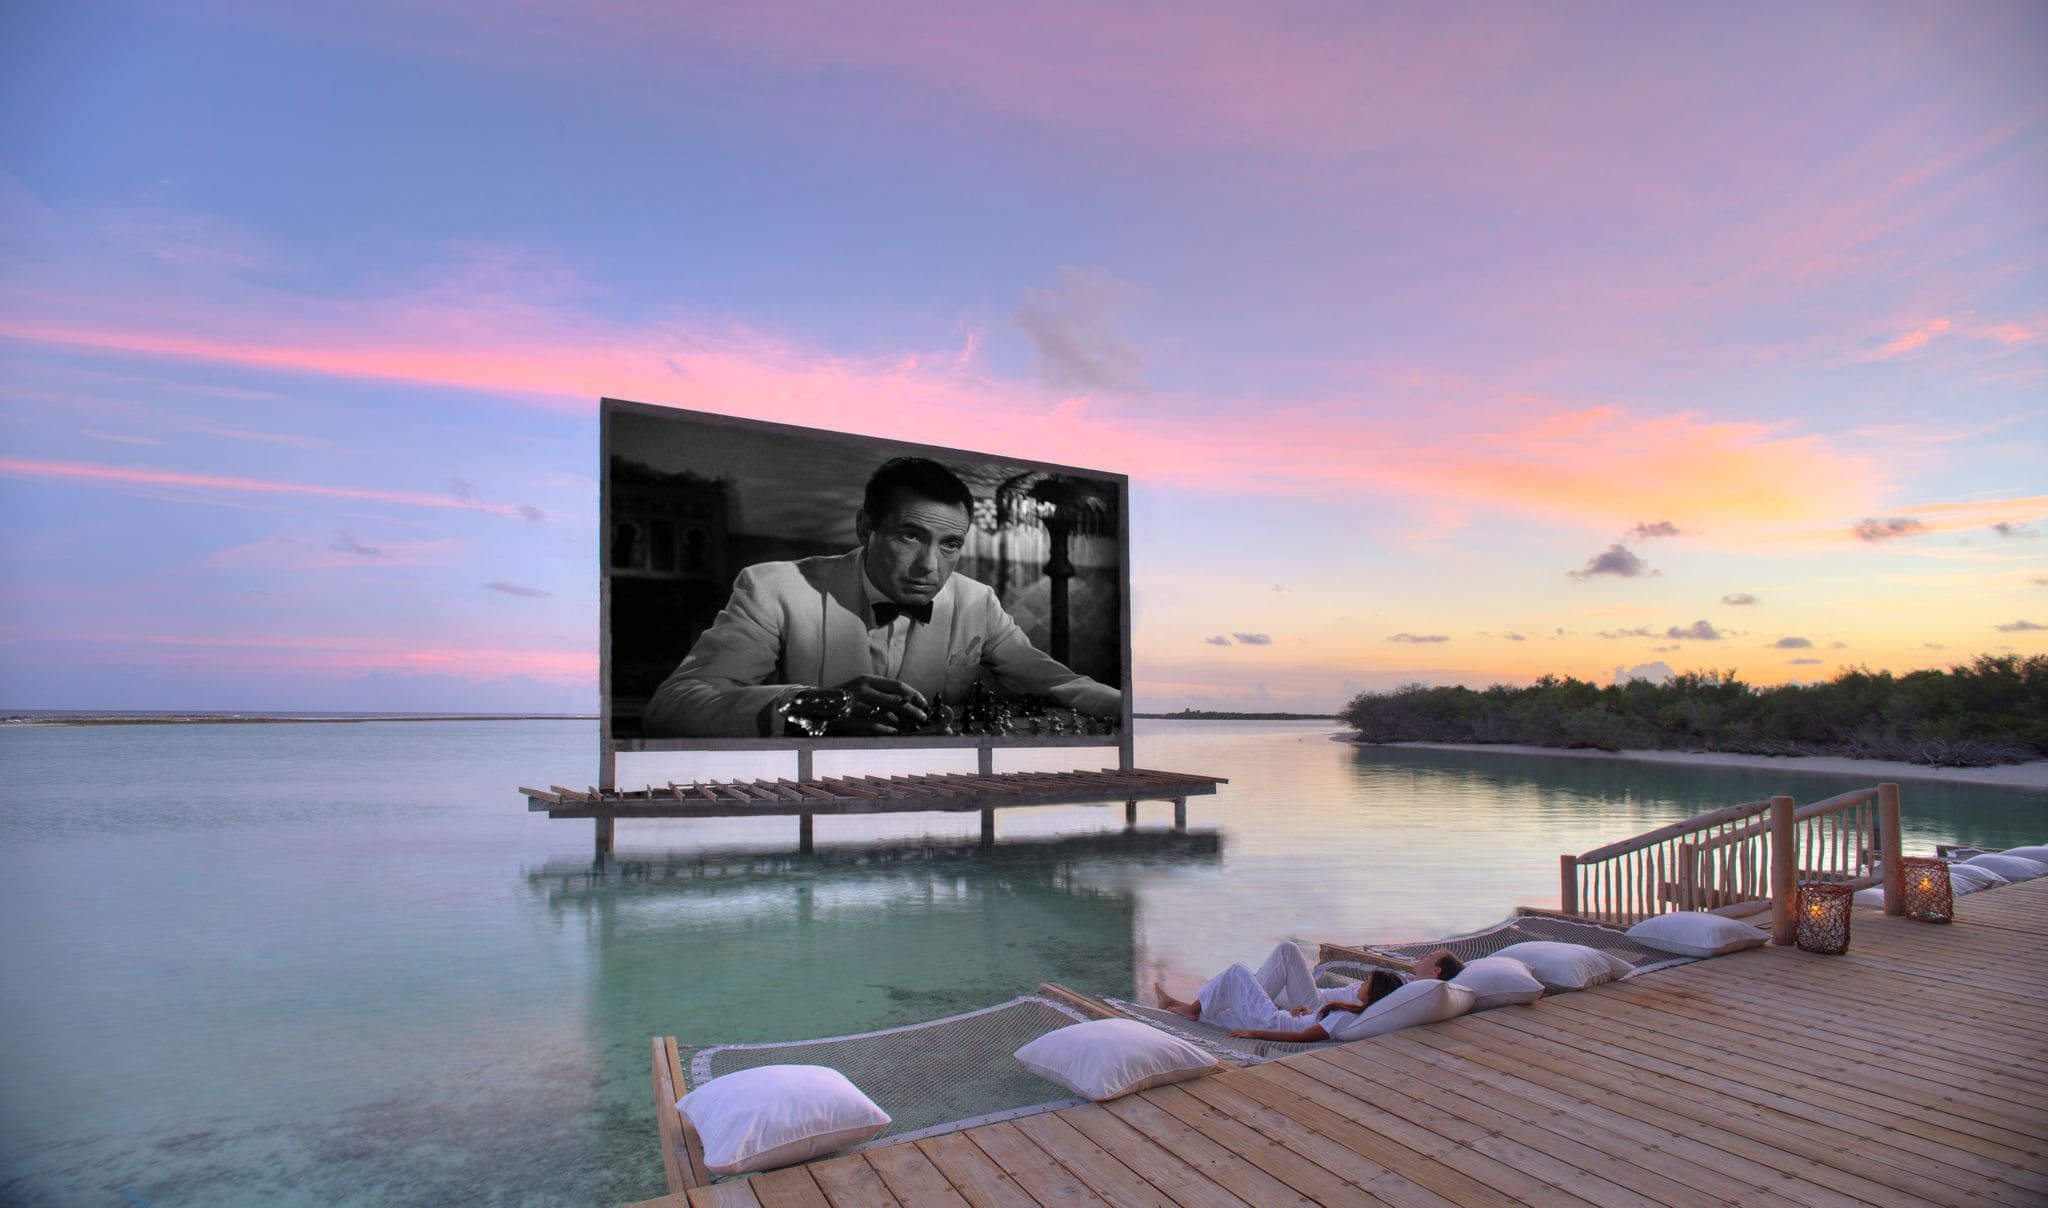 Reisen in Style Magazin - Malediven Kino